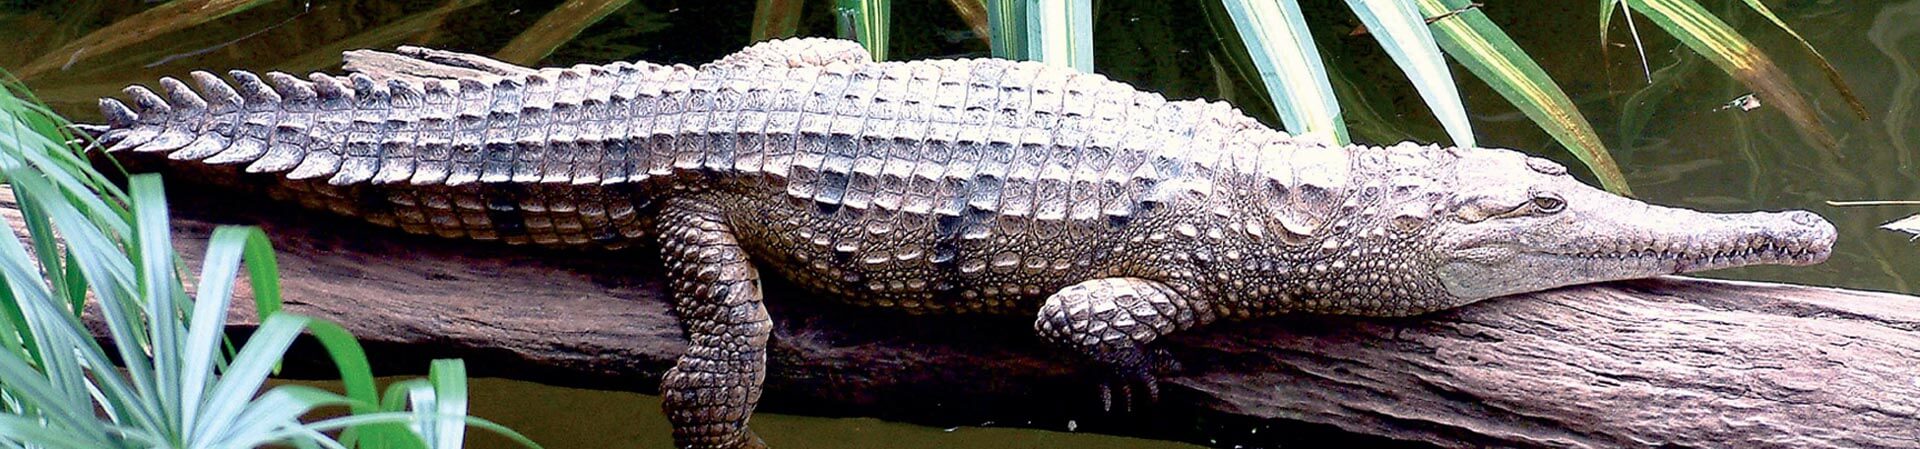 Anima (Crocodylus johnsoni) in Australia - Photo de Guillaume Blanchard (Fujifilm S6900, mars 2003) - licence CC-BY-SA